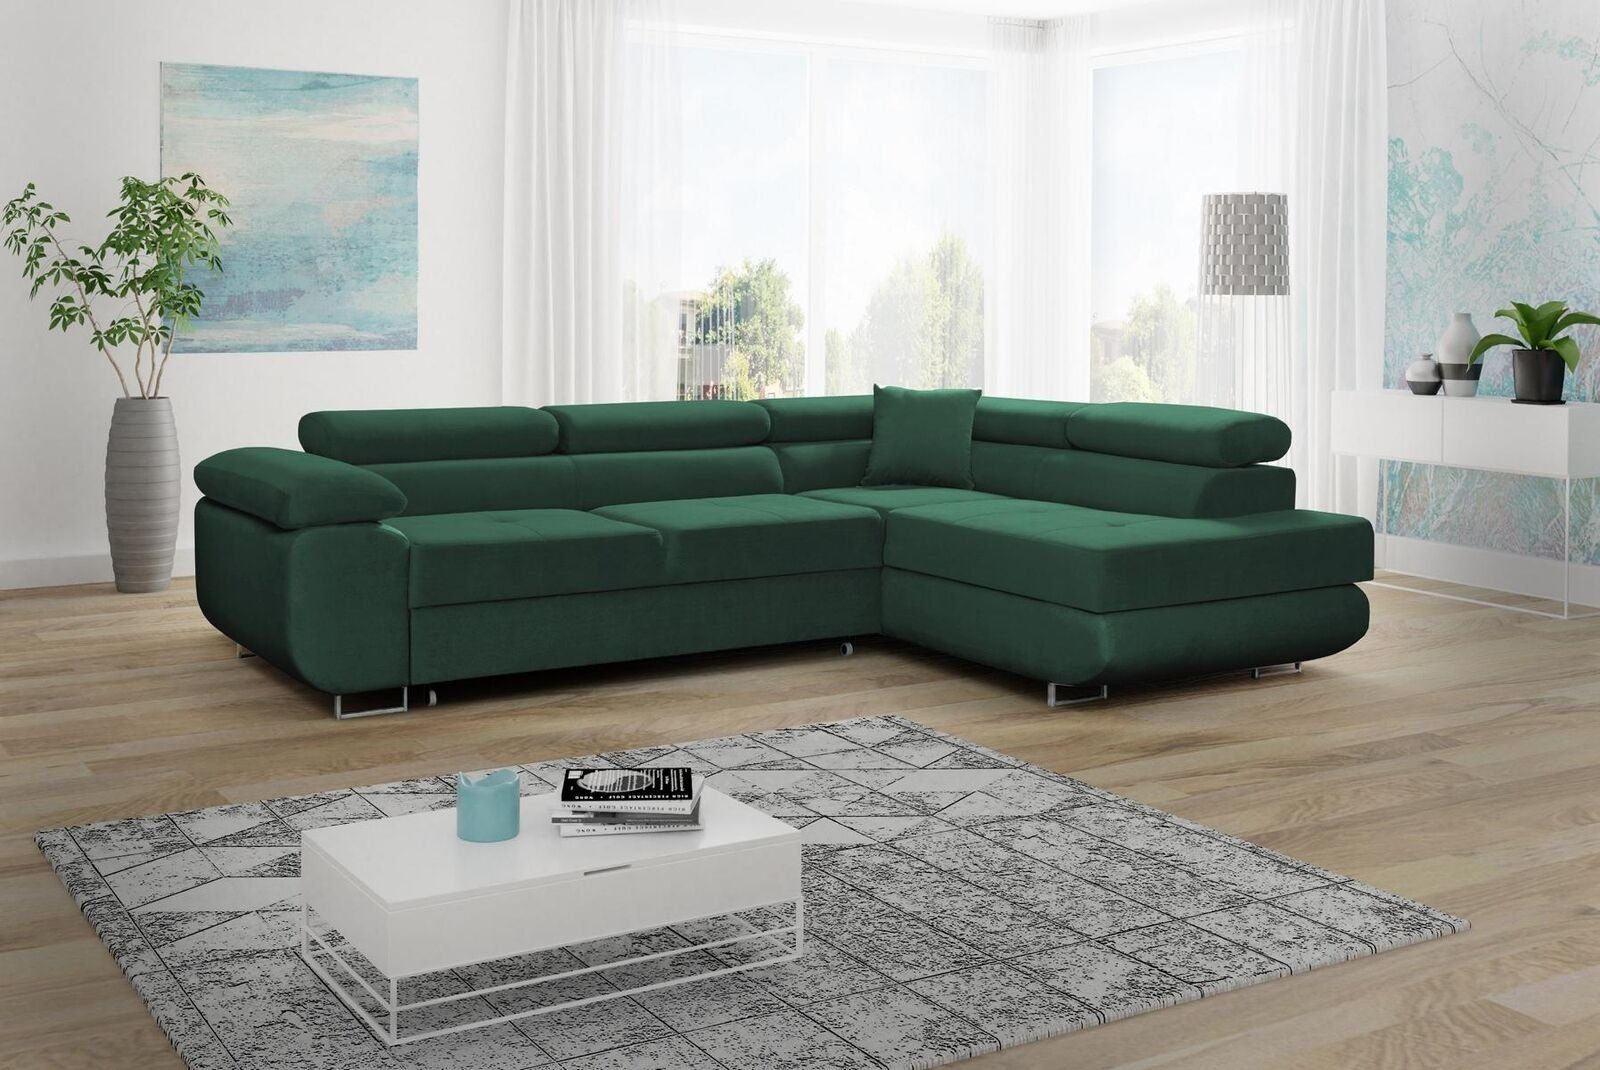 JVmoebel Ecksofa, Design Schlafsofa Möbel Textilpolster Couch Sofa L Form Ecksofa Grün